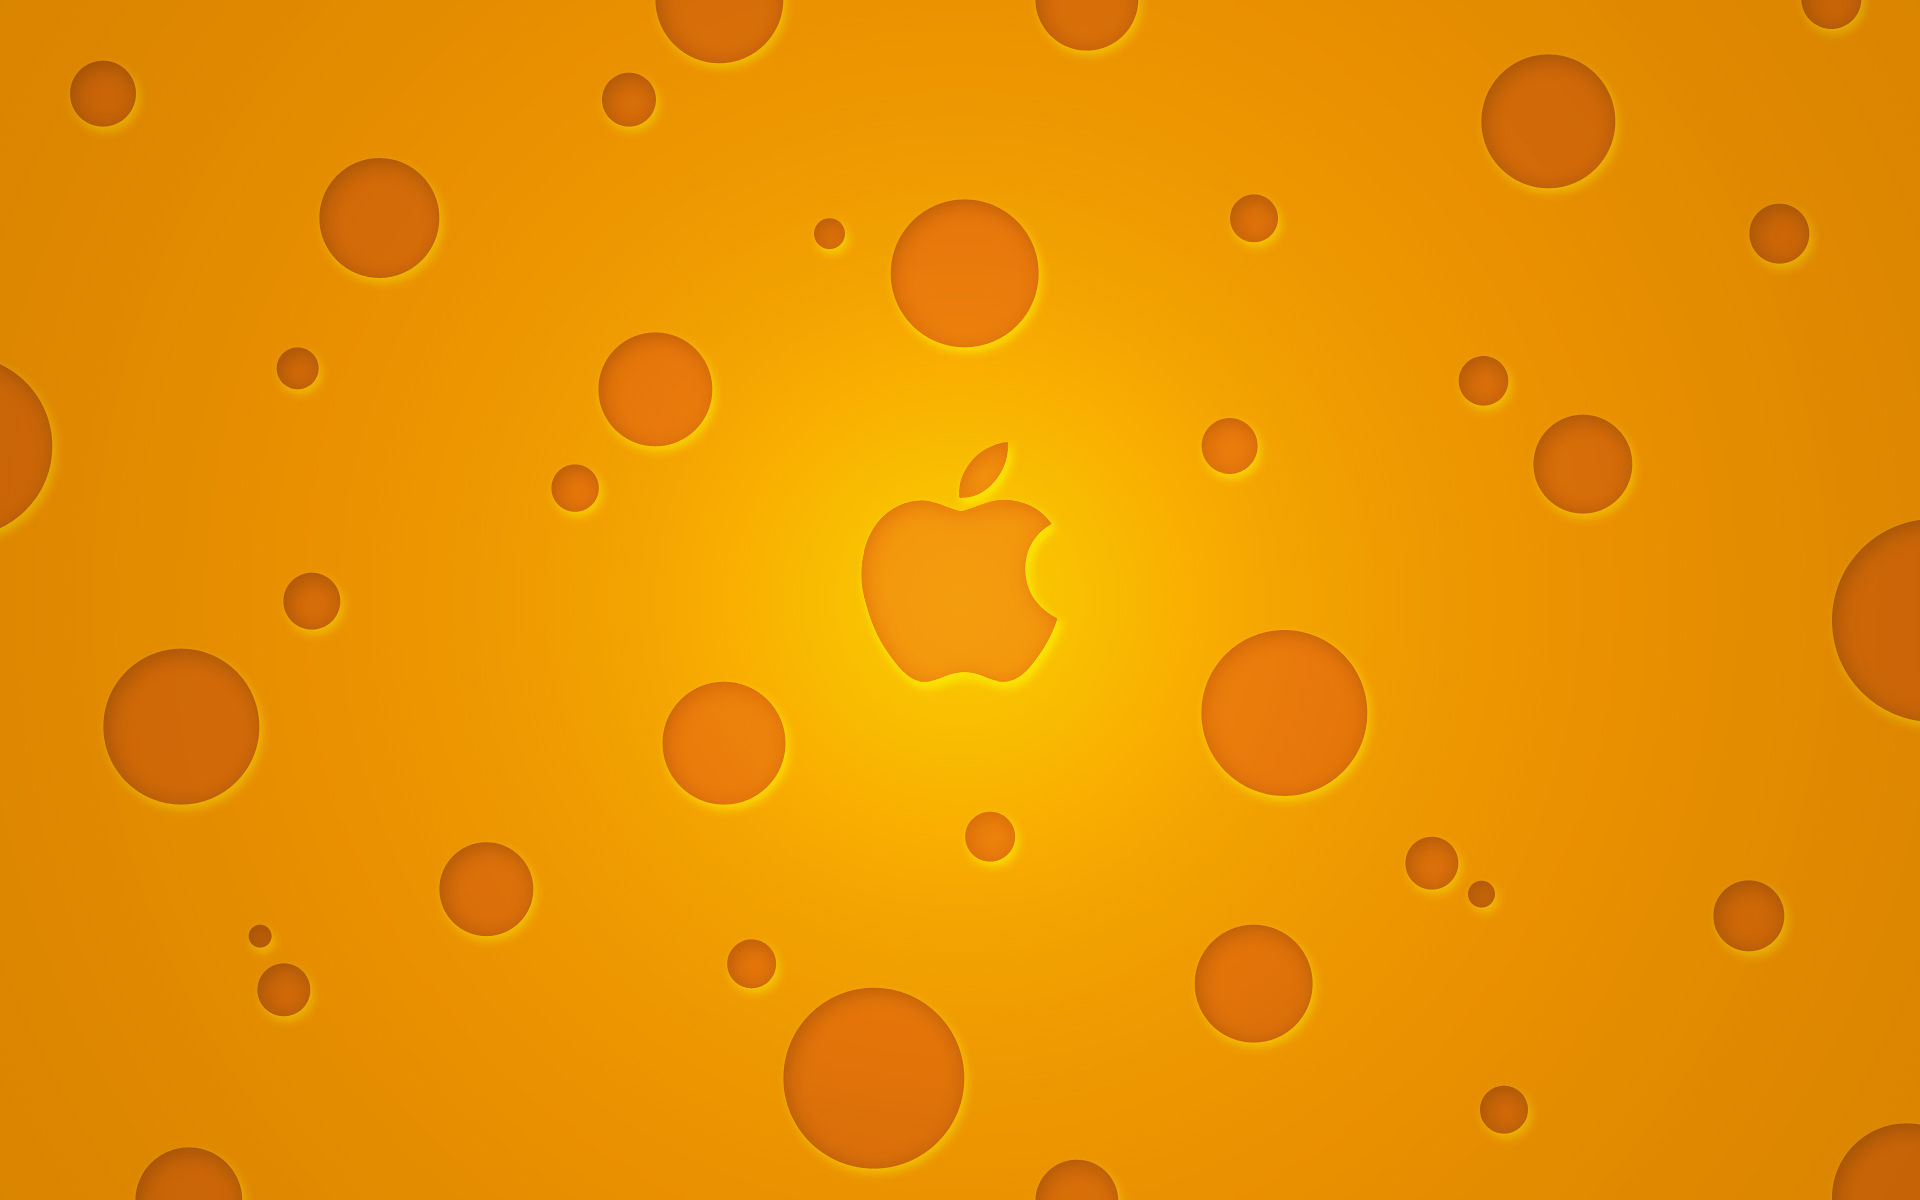 желтый цвет, Эппл (Apple), точки - обои на рабочий стол